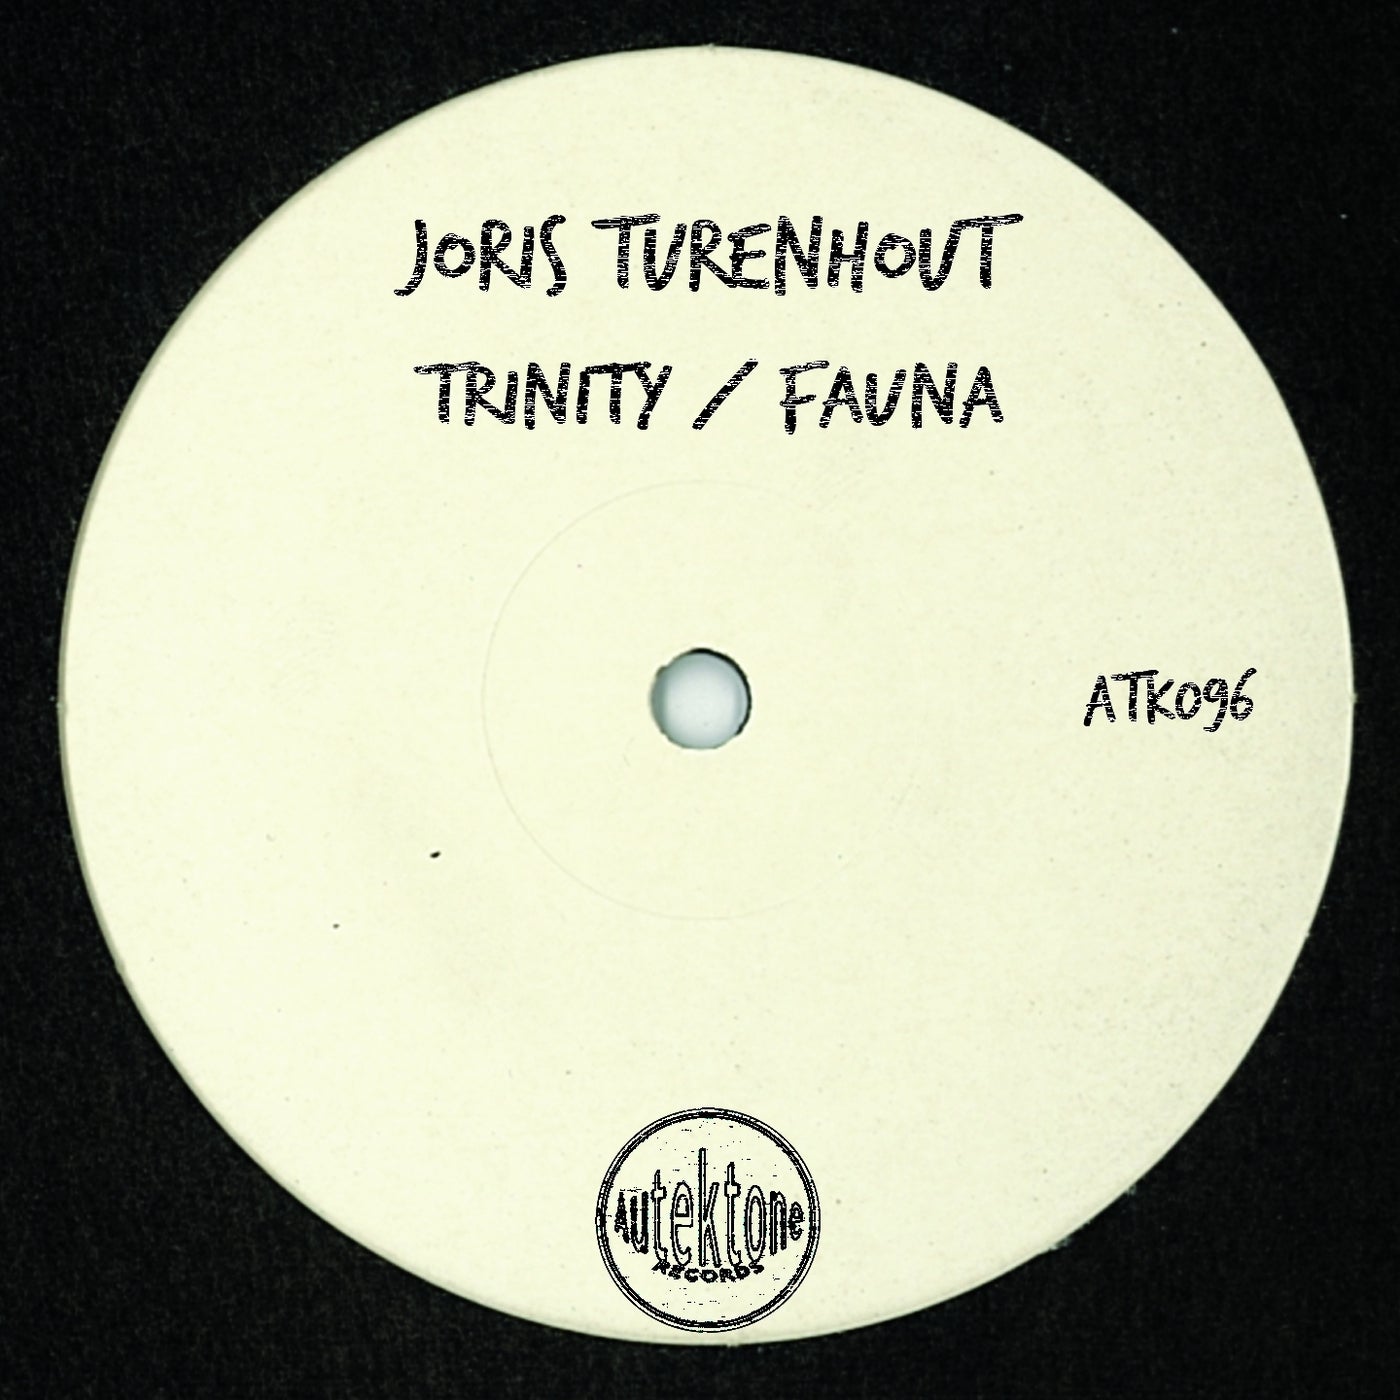 Joris Turenhout - Trinity / Fauna [ATK096]